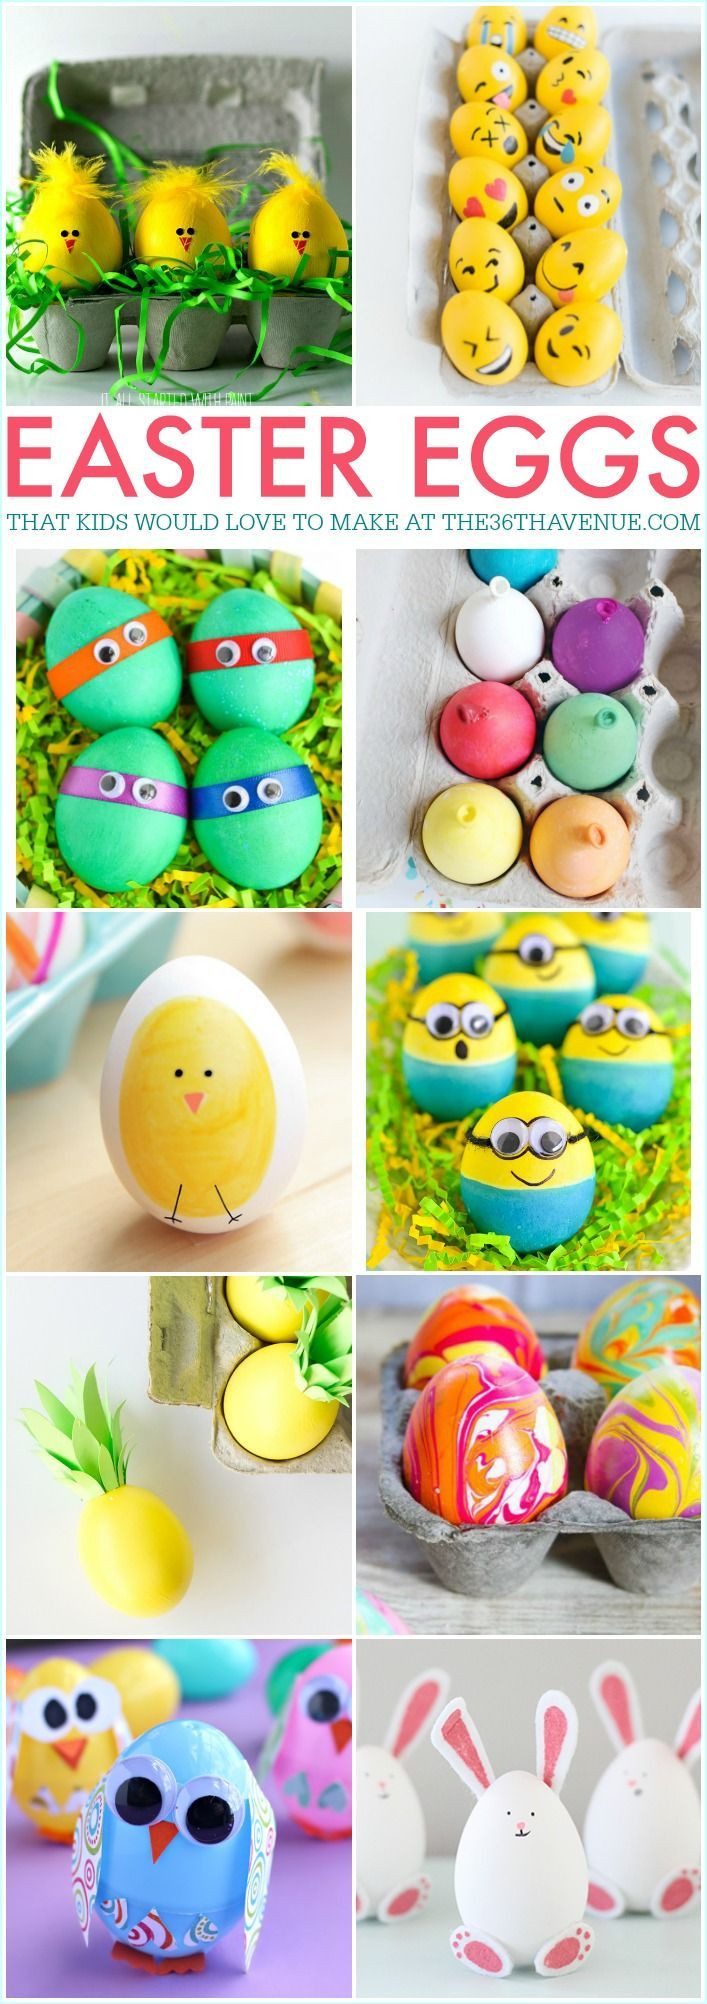 Easter Egg Dying Party Ideas
 Easter Eggs for Kids Easter